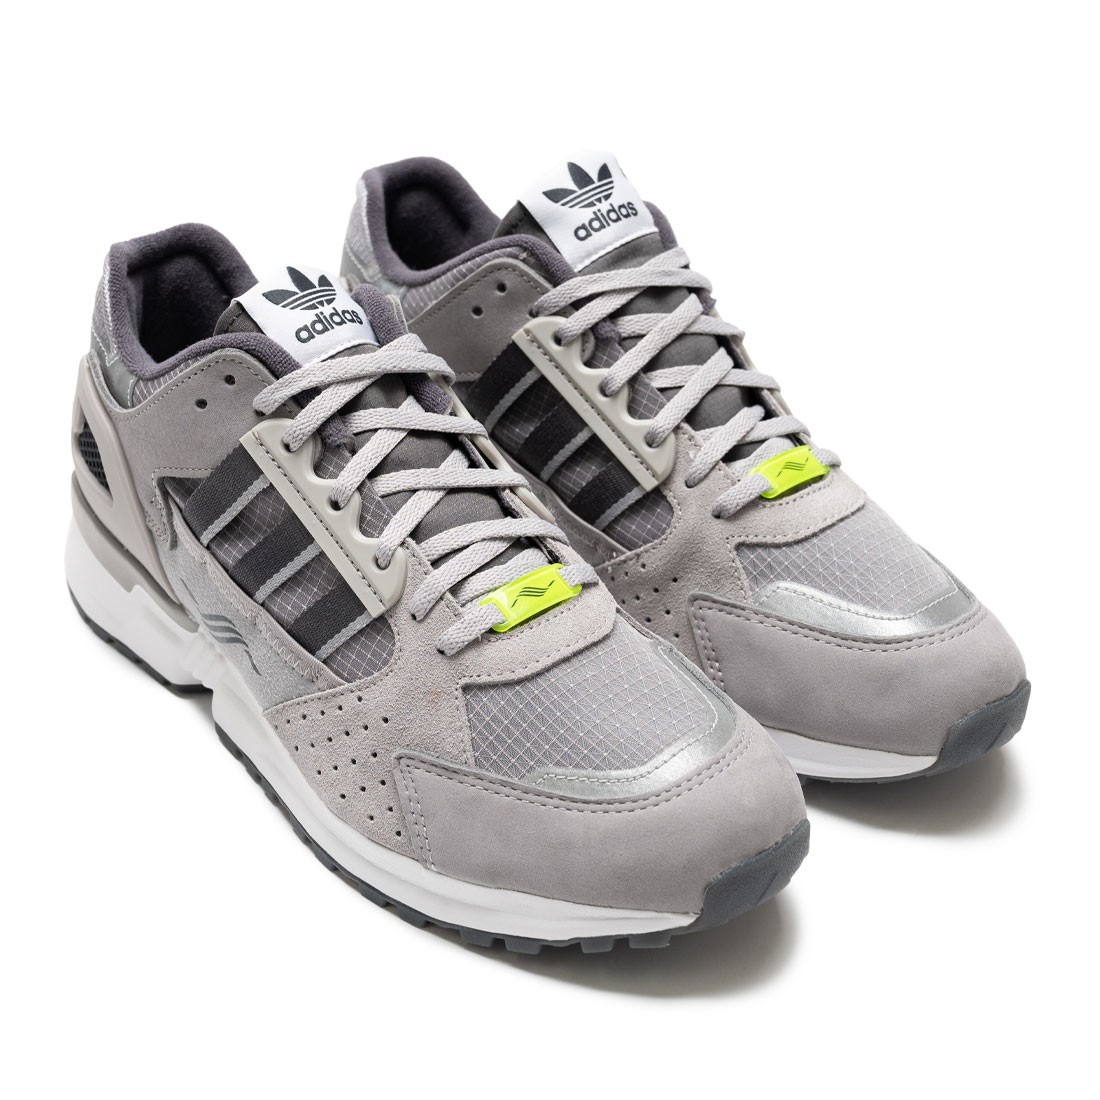 Adidas Men ZX 10,000 C gray clear grey core black